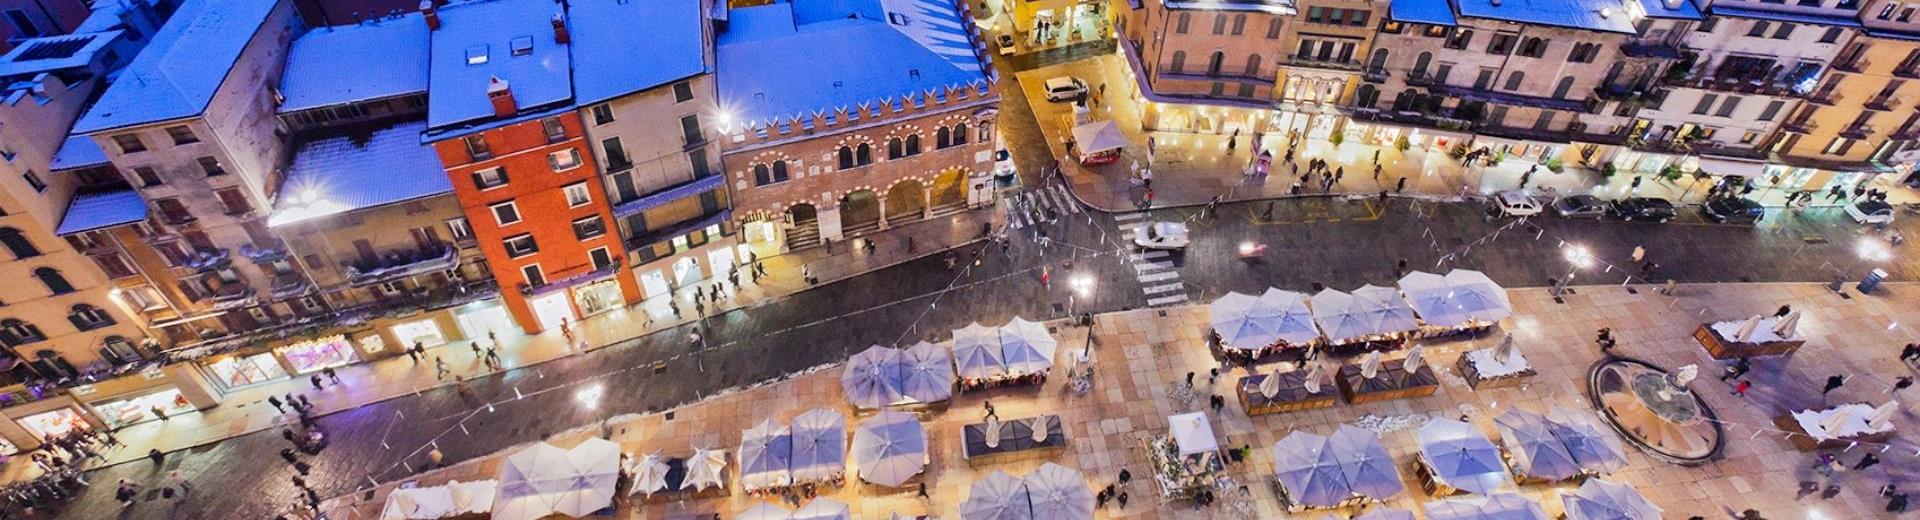 BW CTC Hotel Verona - offer Christmas Markets Verona